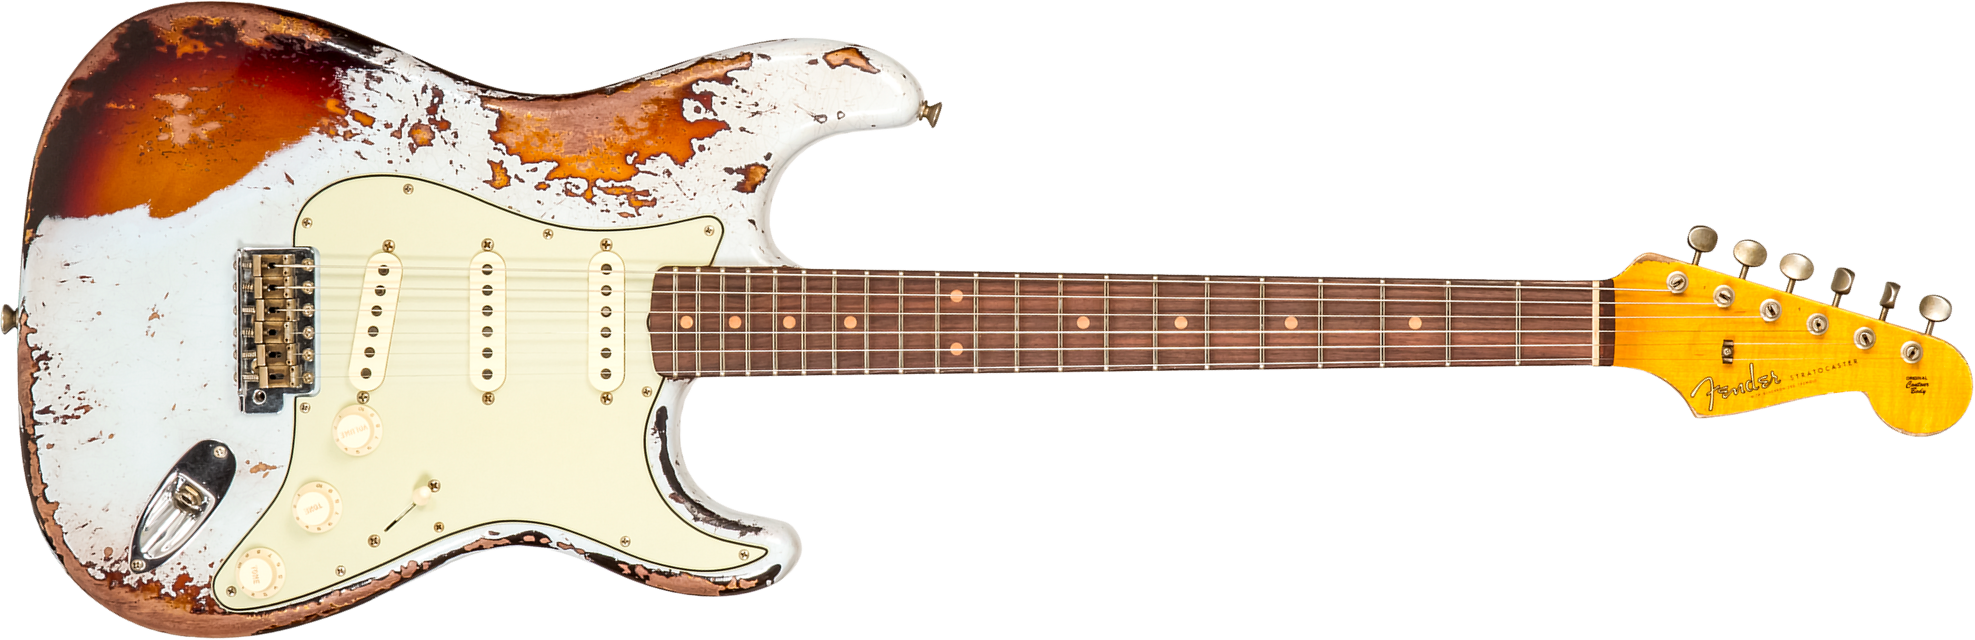 Fender Custom Shop Strat 1959 3s Trem Rw #cz576124 - Super Heavy Relic Sonic Blue O. Chocolate Sunburst - Str shape electric guitar - Main picture